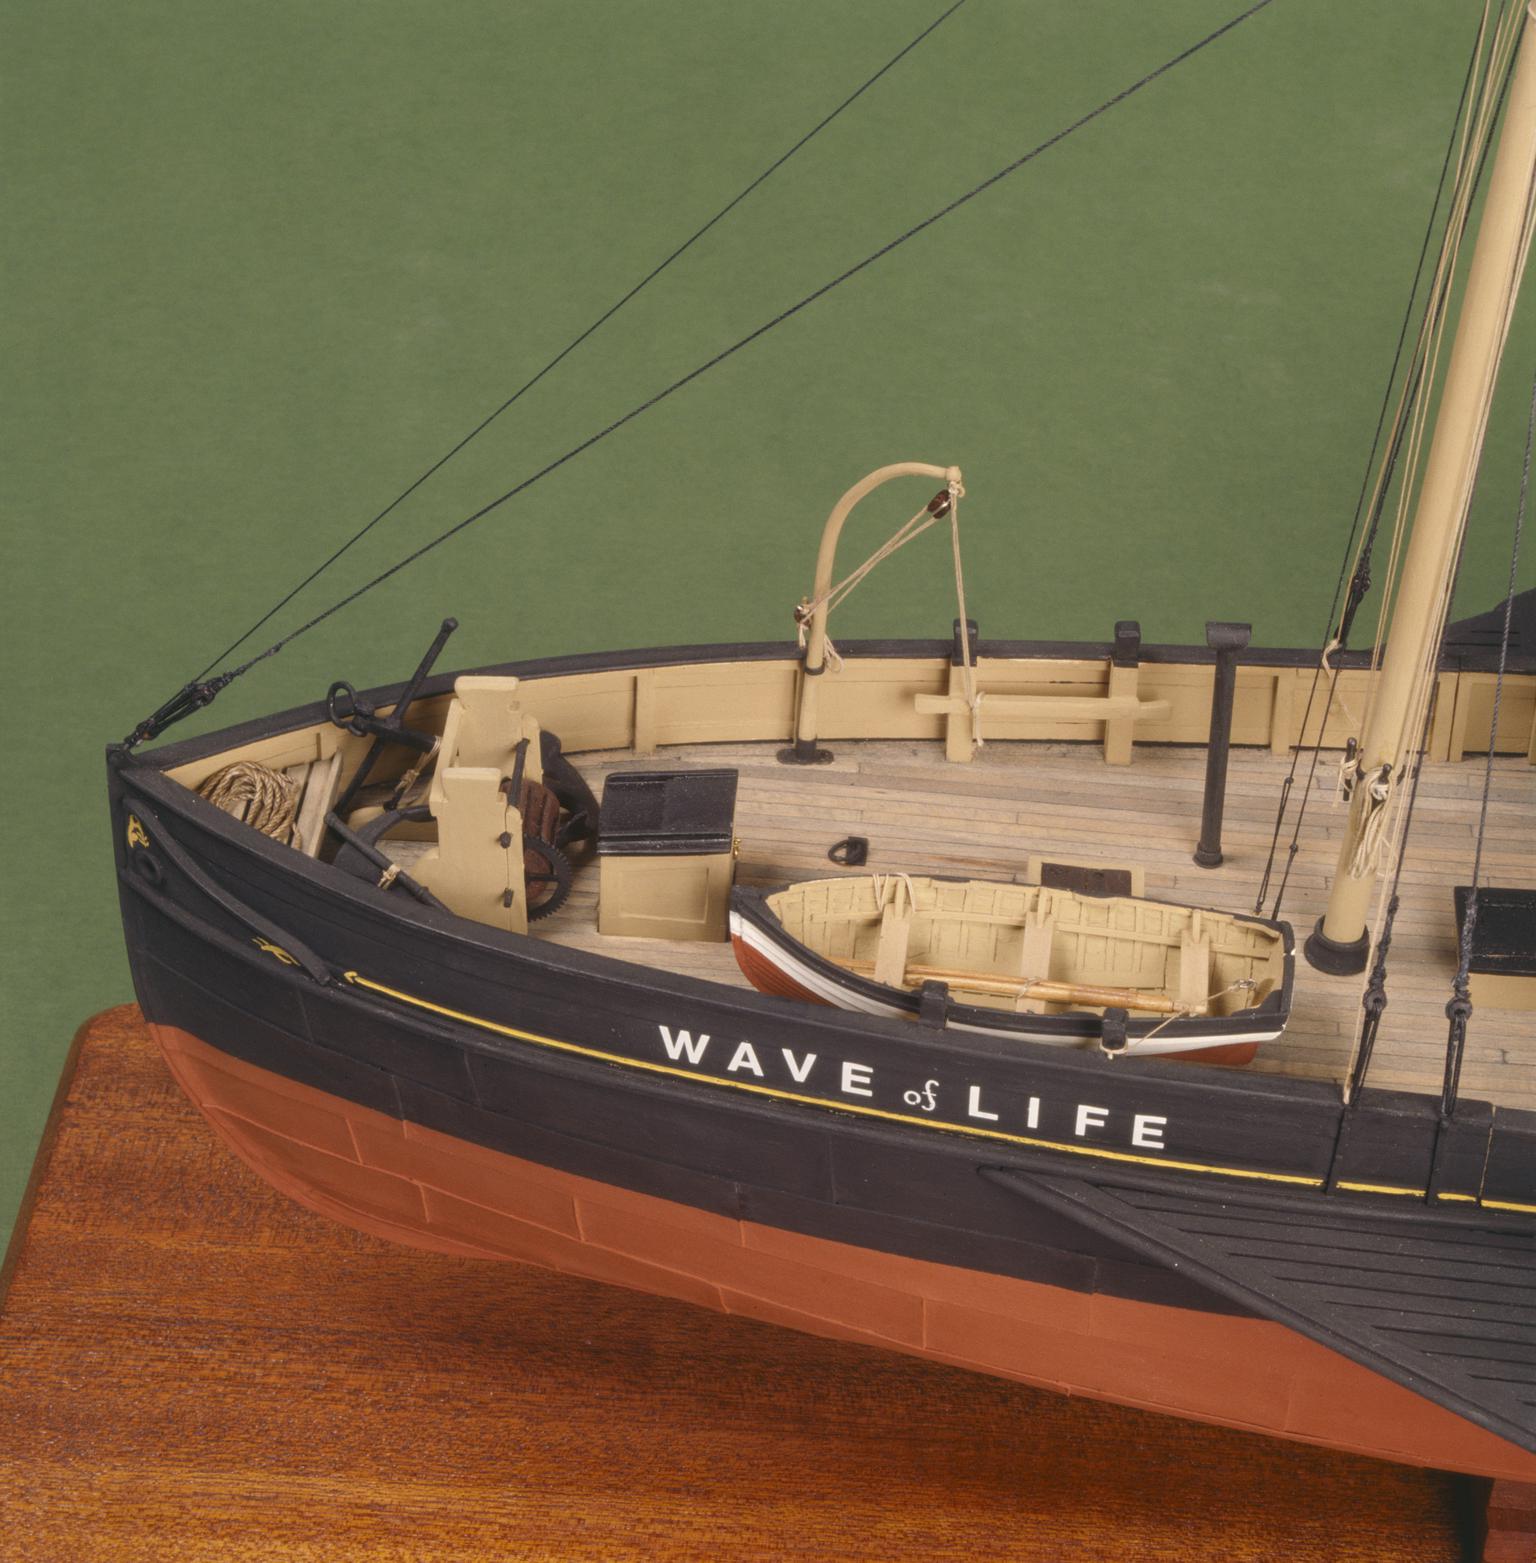 WAVE OF LIFE, full hull ship model